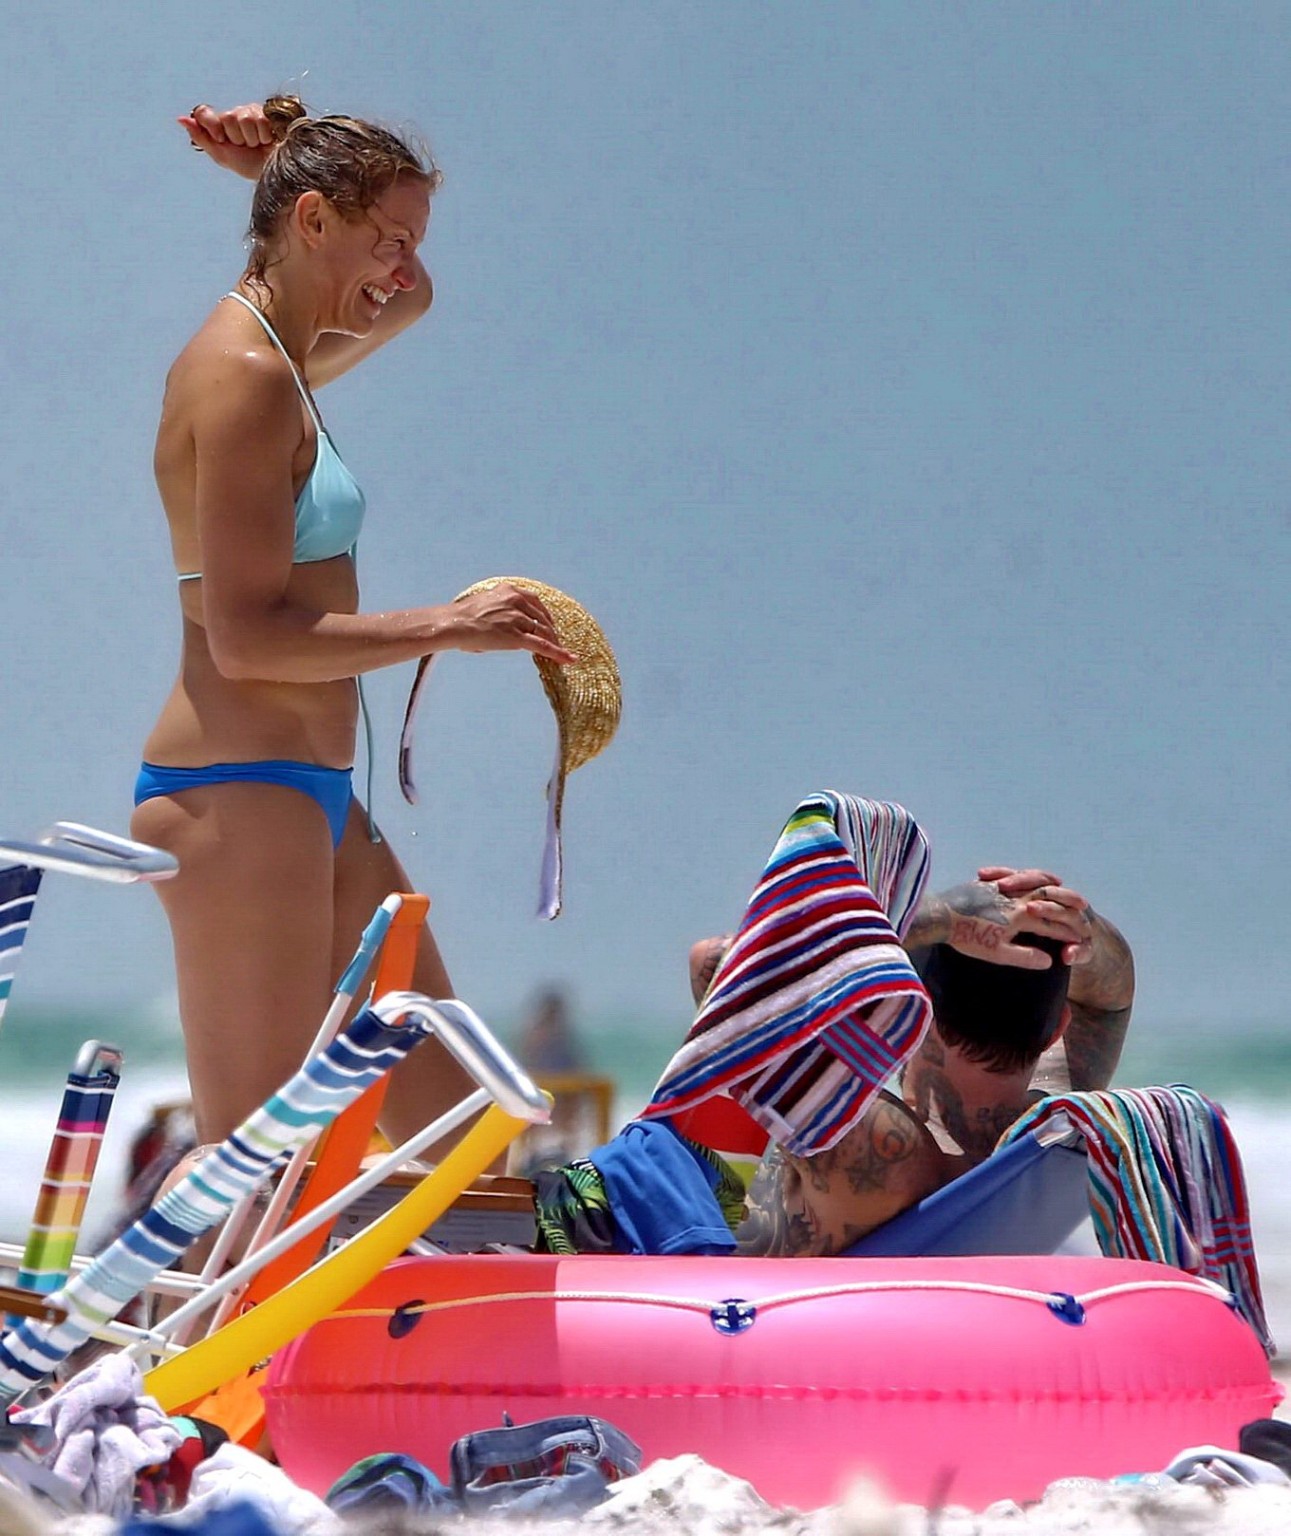 Cameron Diaz shows ass crack wearing a skimpy bikini on a beach in Florida #75191745